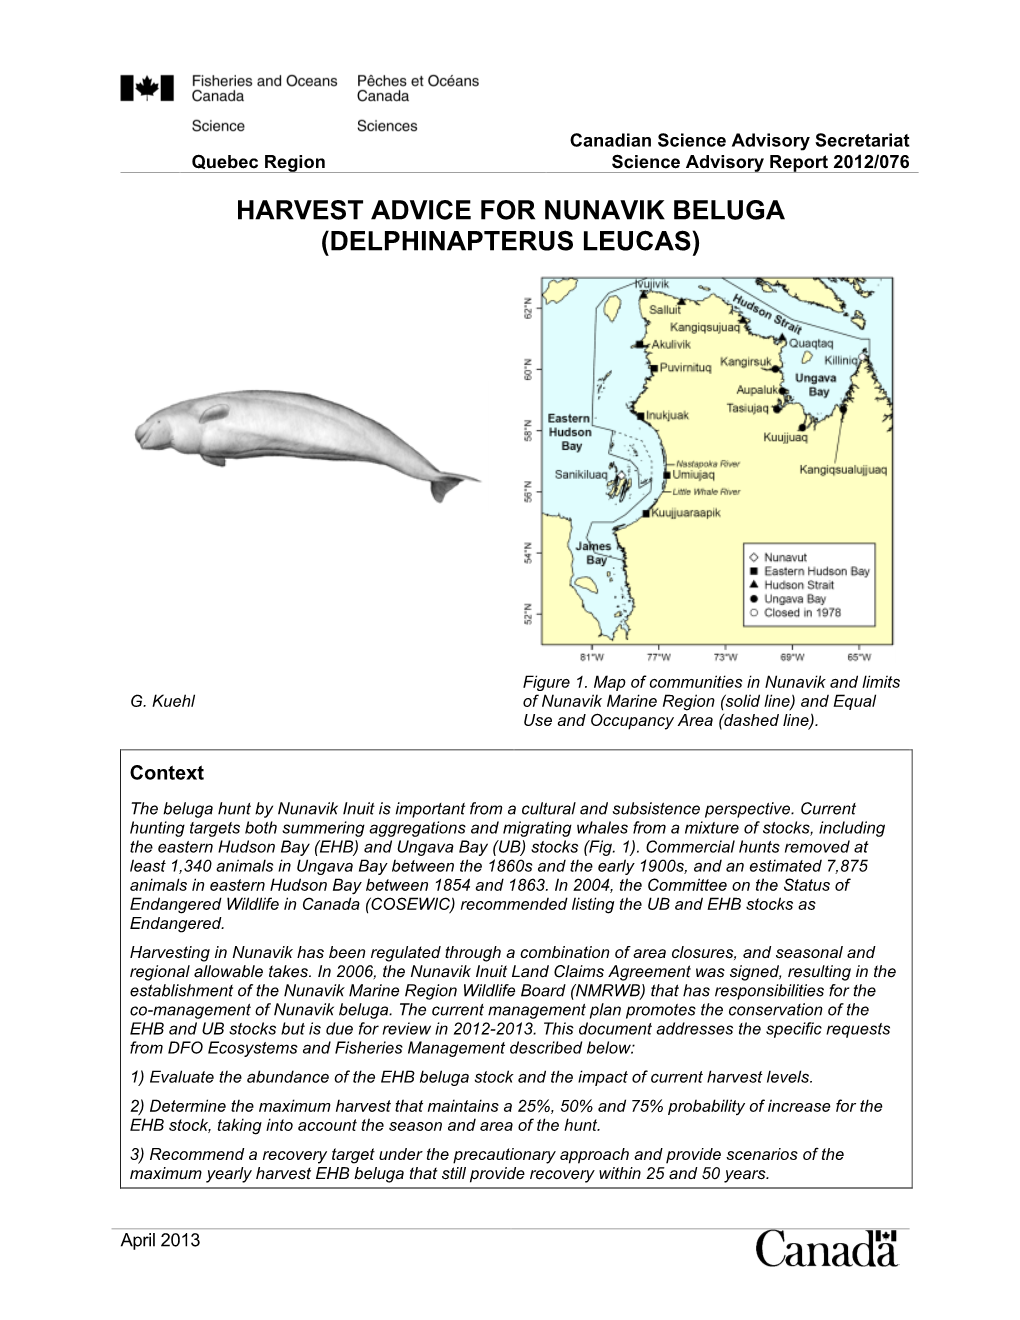 Harvest Advice for Nunavik Beluga (Delphinapterus Leucas)